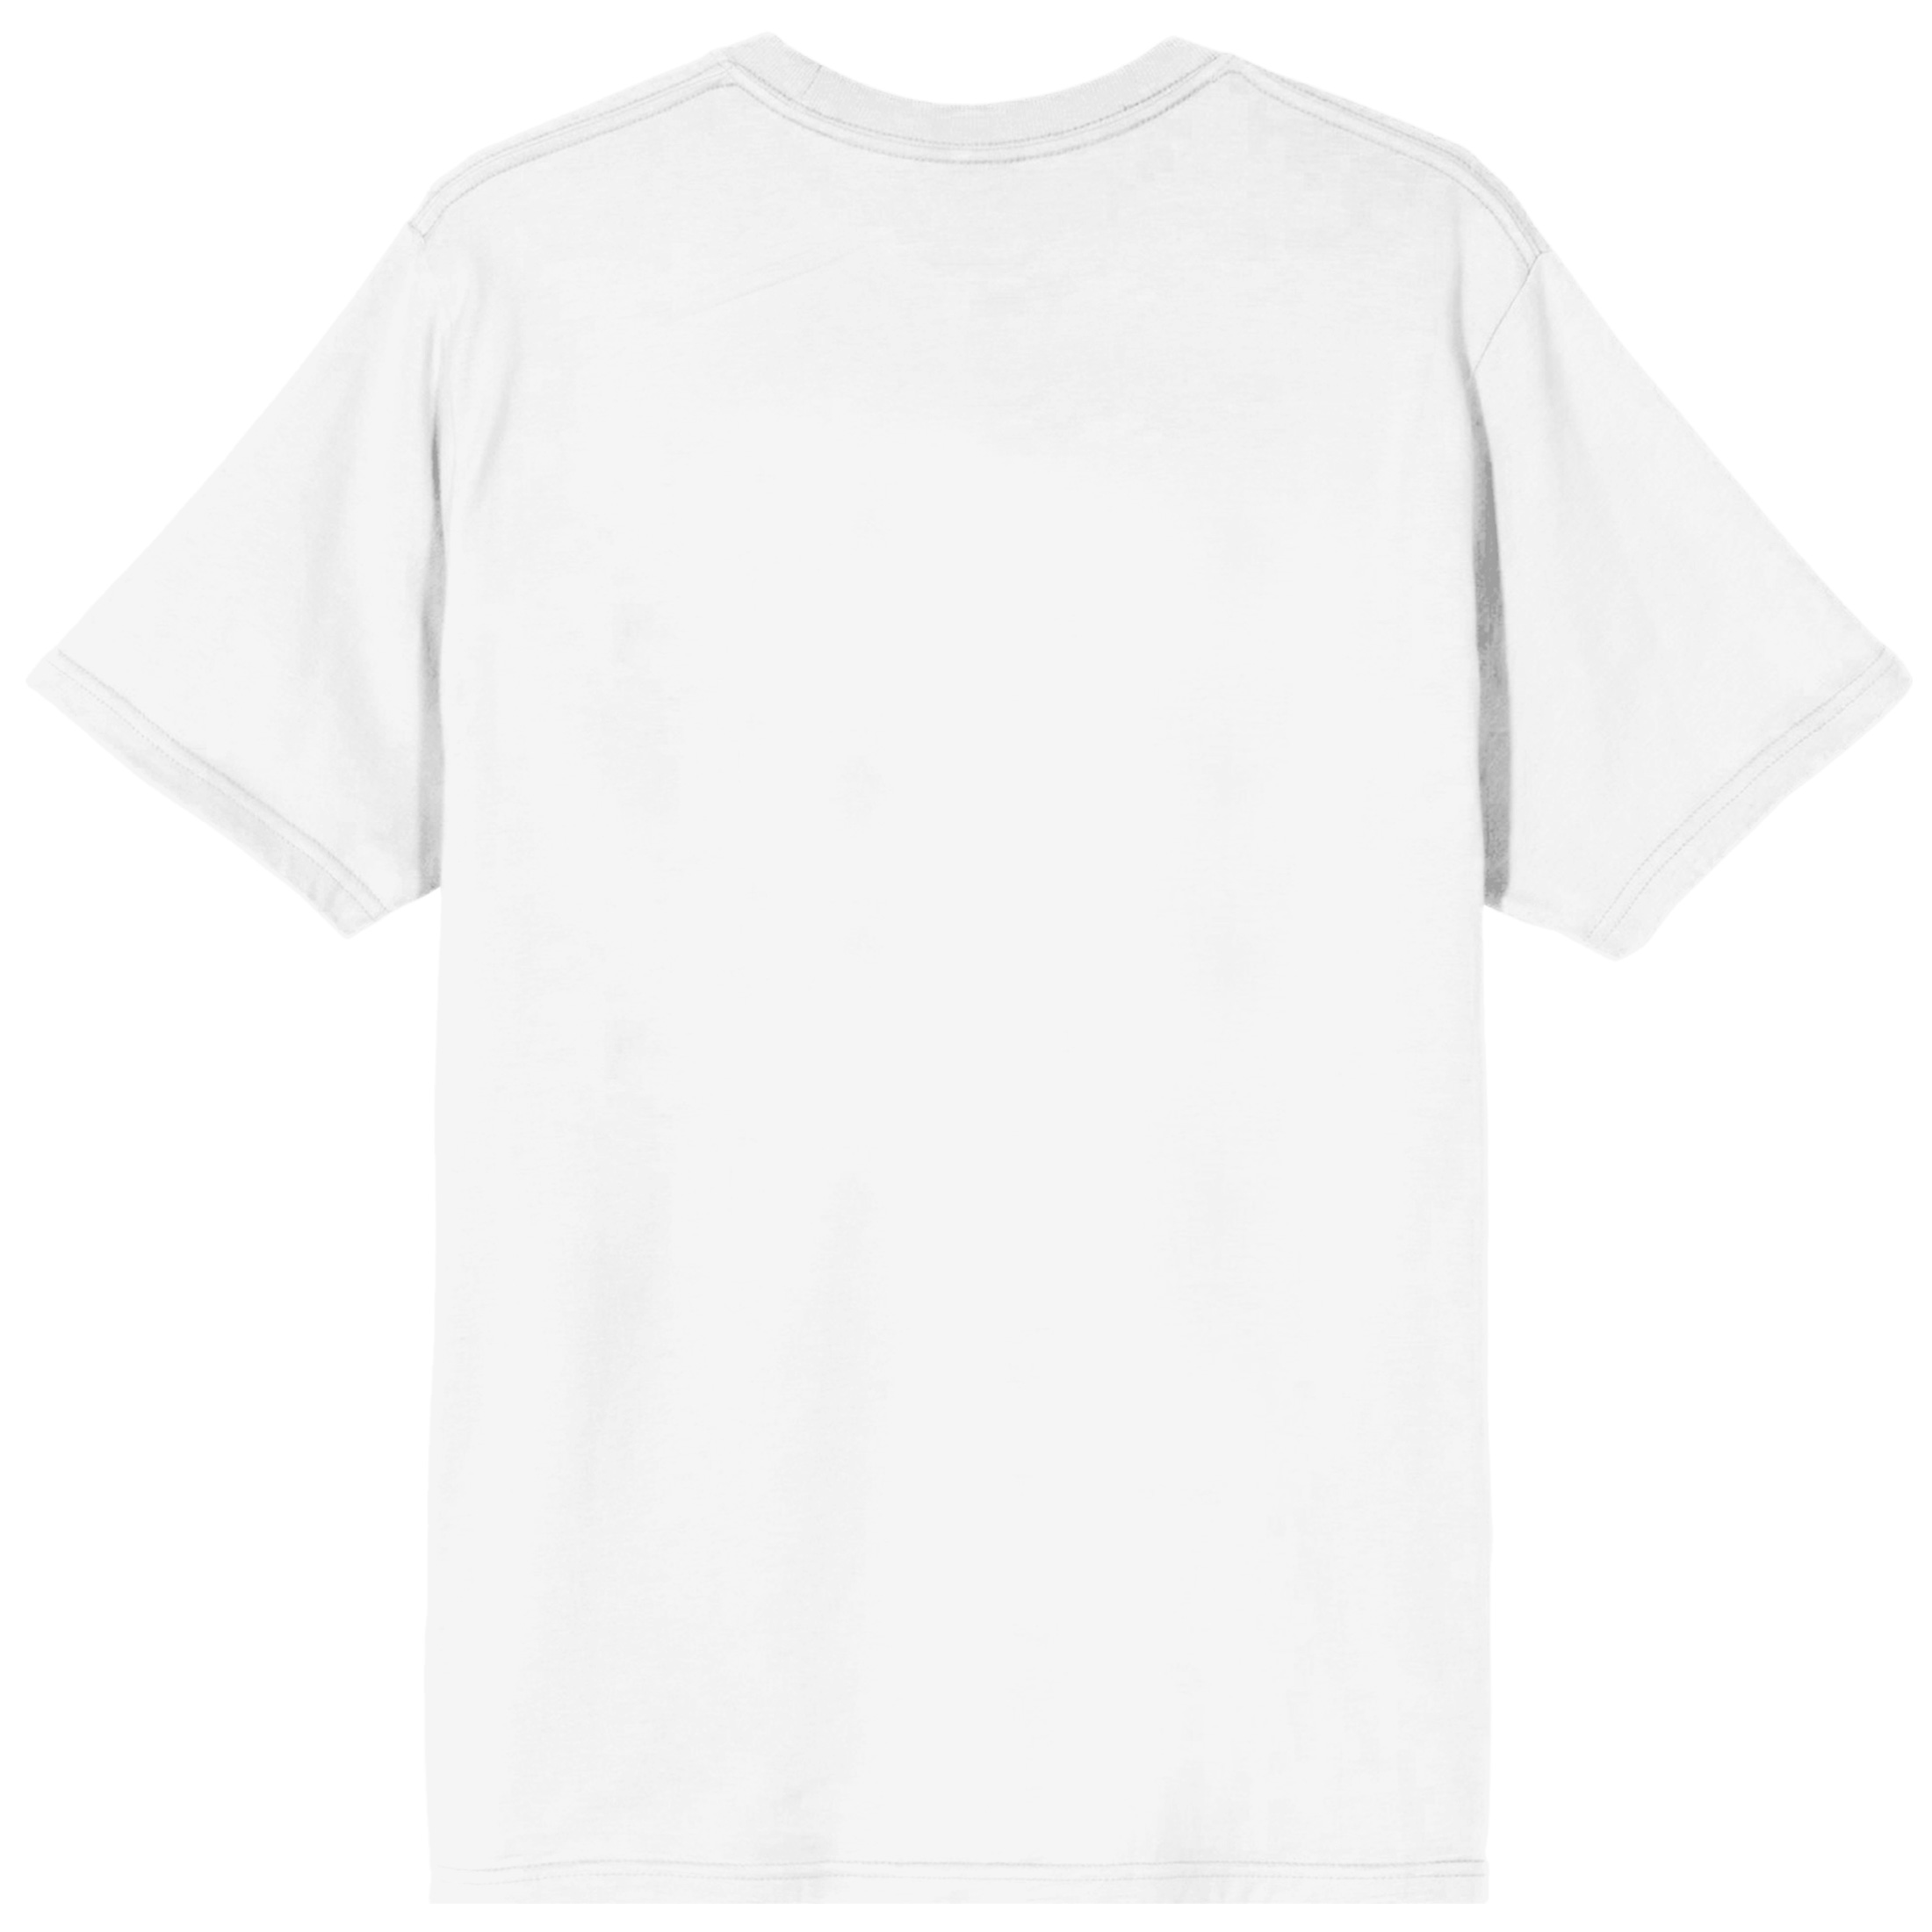 My Hero Academia Rainy Season Hero Froppy Men's White T-shirt-XL - image 4 of 4